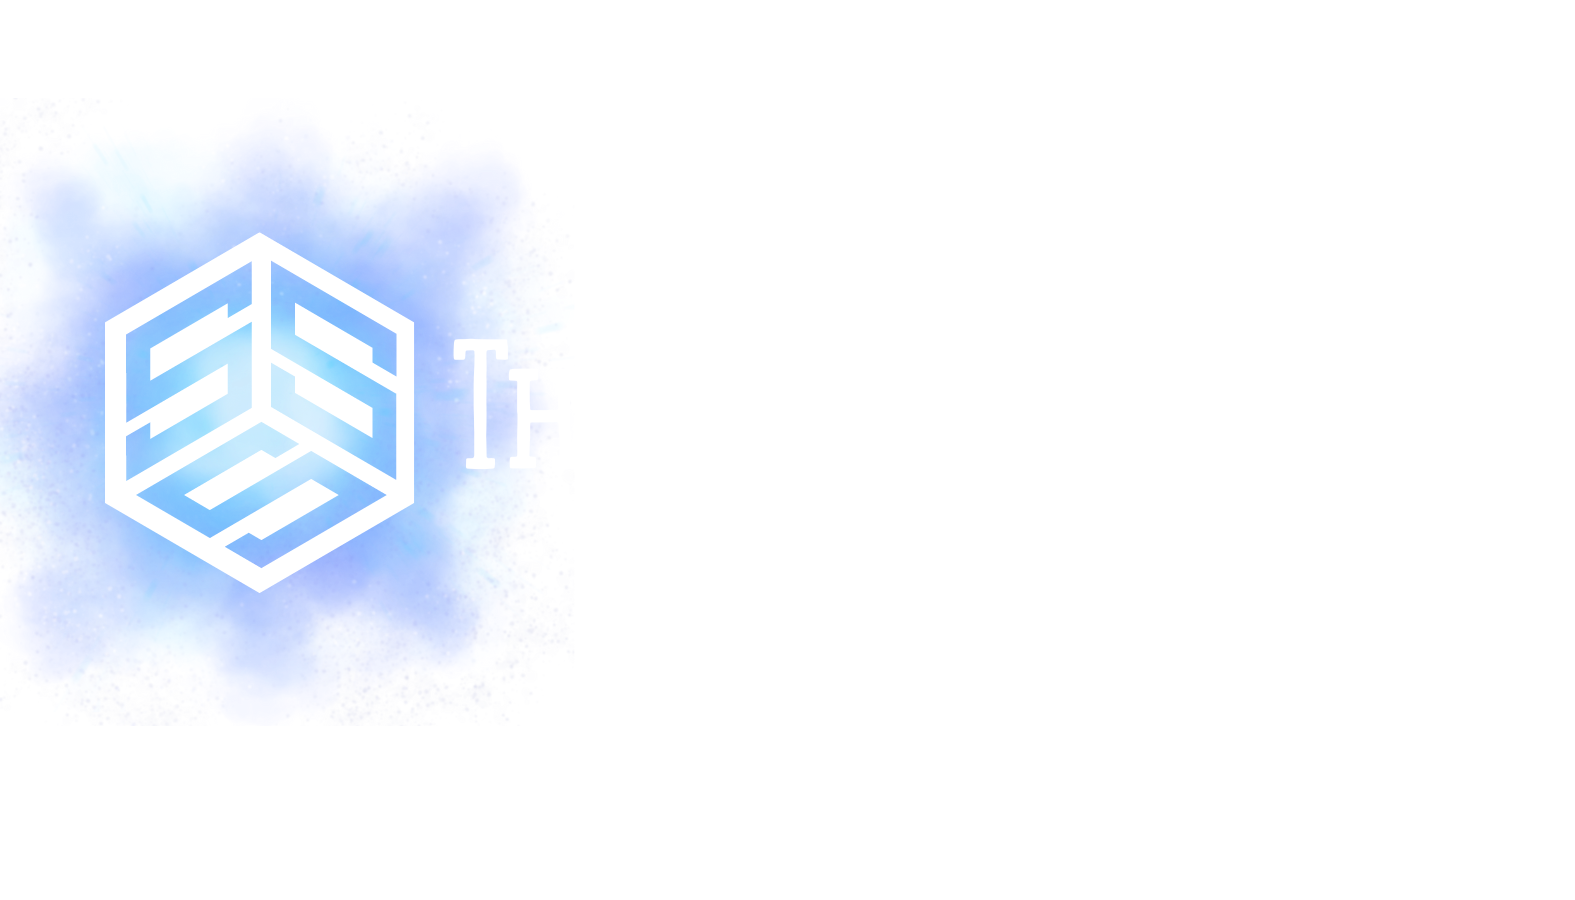 TheShortStopShop